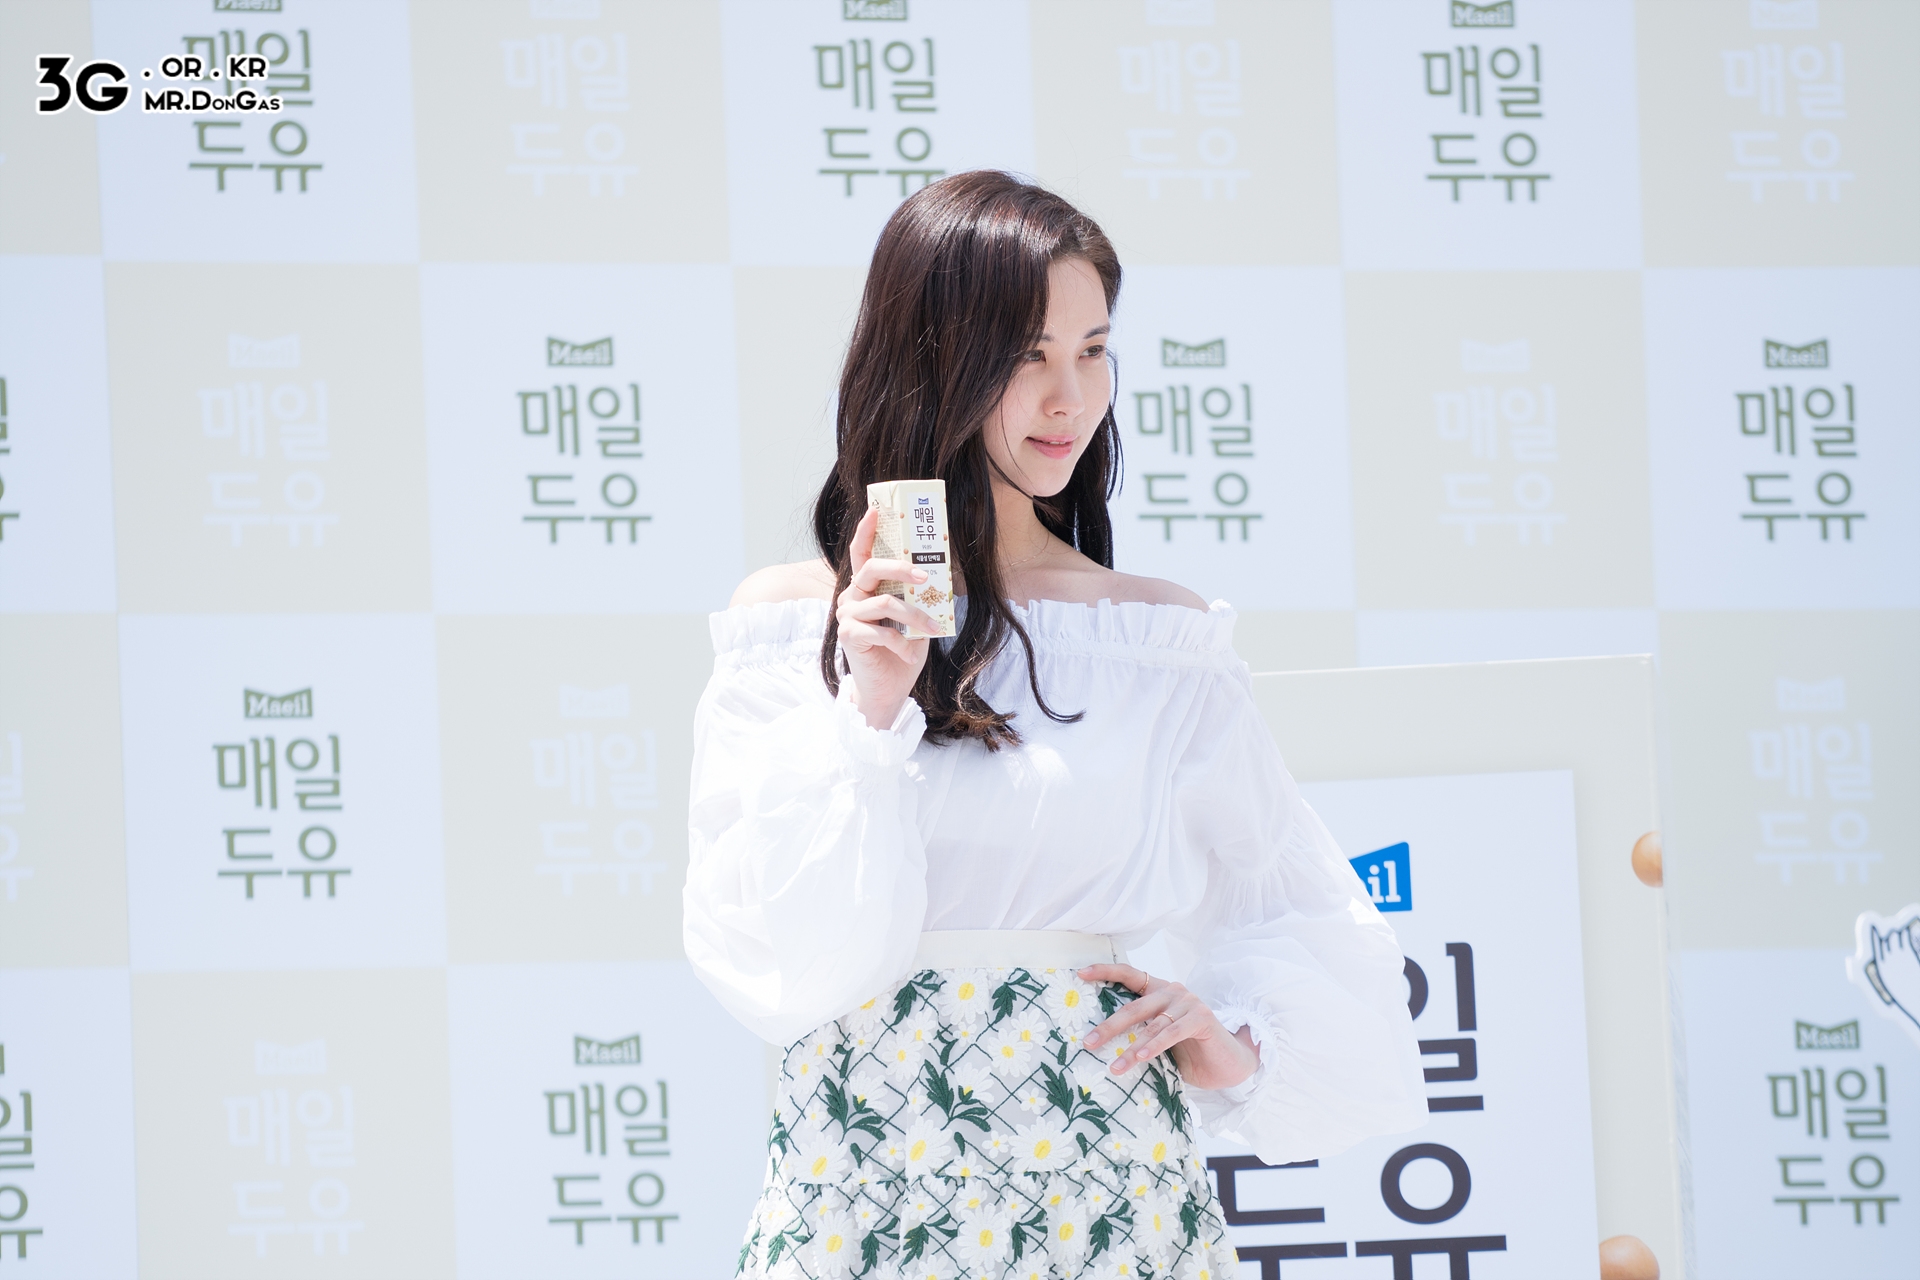  [PIC][03-06-2017]SeoHyun tham dự sự kiện “City Forestival - Maeil Duyou 'Confidence Diary'” vào chiều nay - Page 2 2515AE4C5933CE2109880E